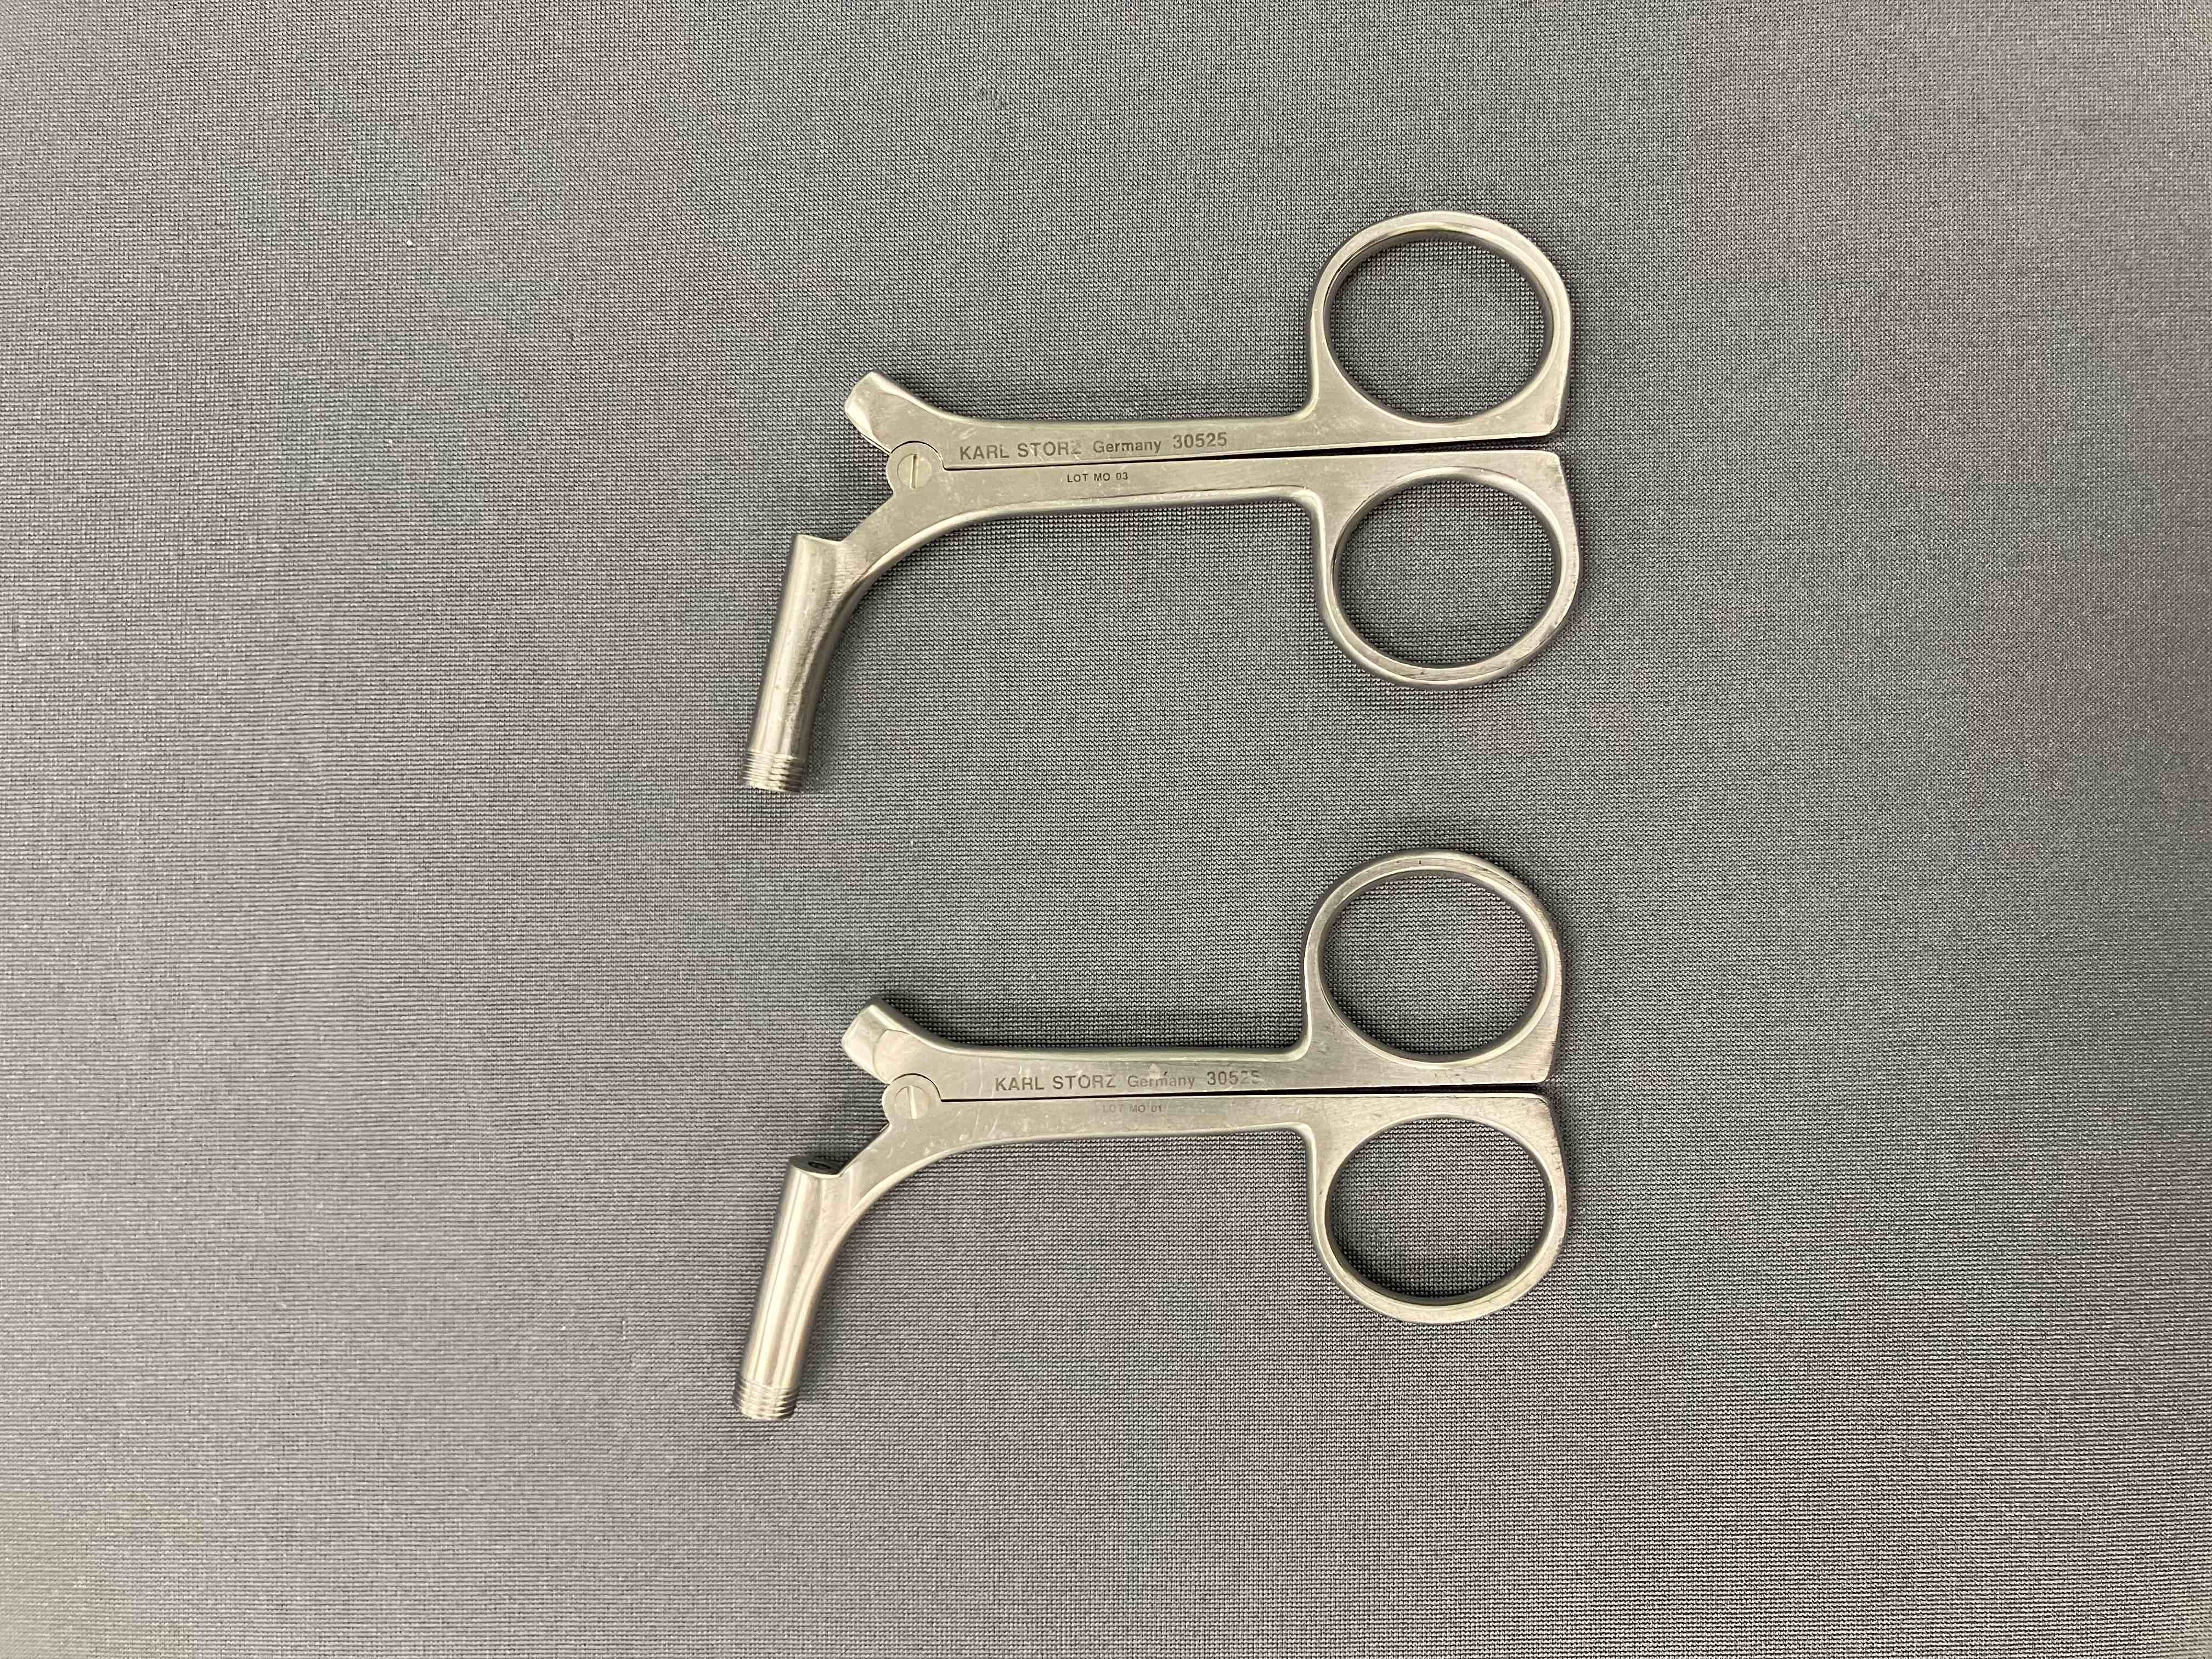 Karl Storz 30525 Laparoscopic Forcep Handle - lot of 2 tools